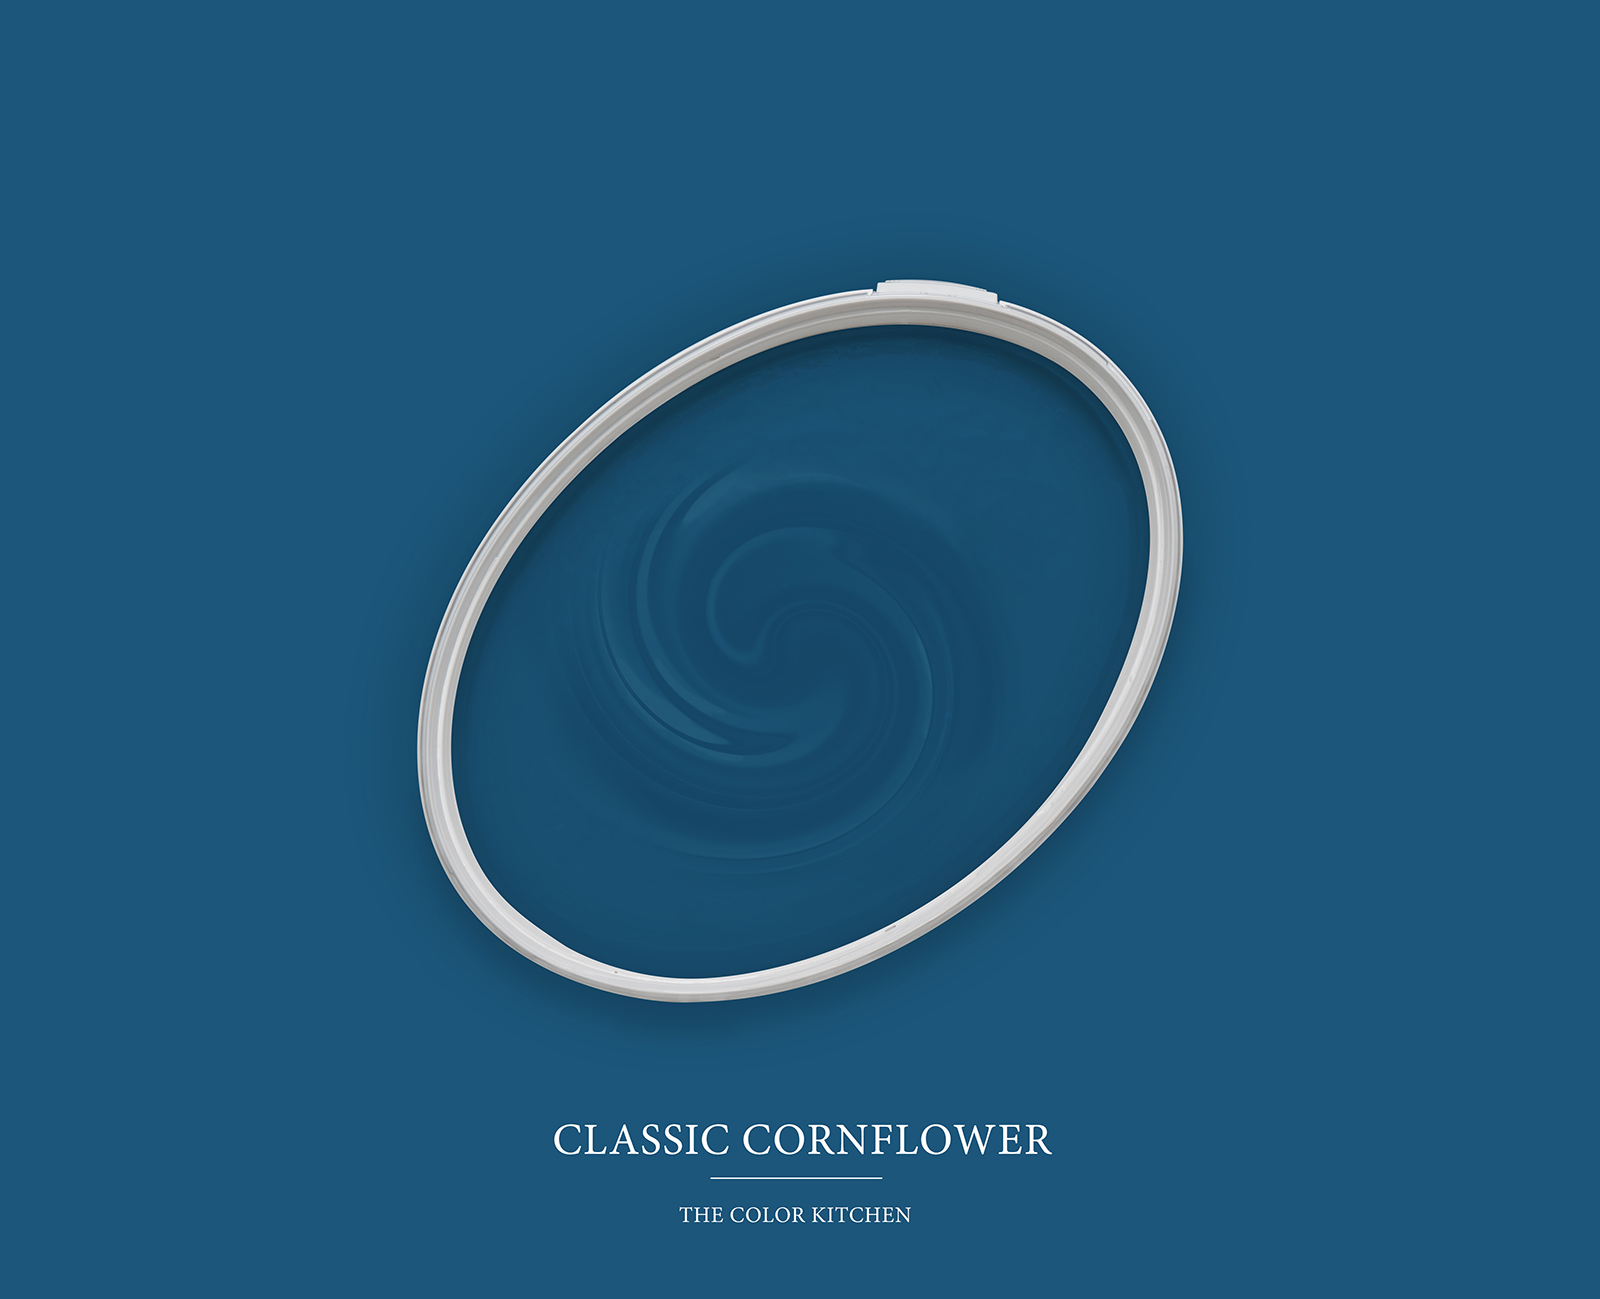         Wall Paint TCK3005 »Classic Cornflower« in intense blue – 2.5 litre
    